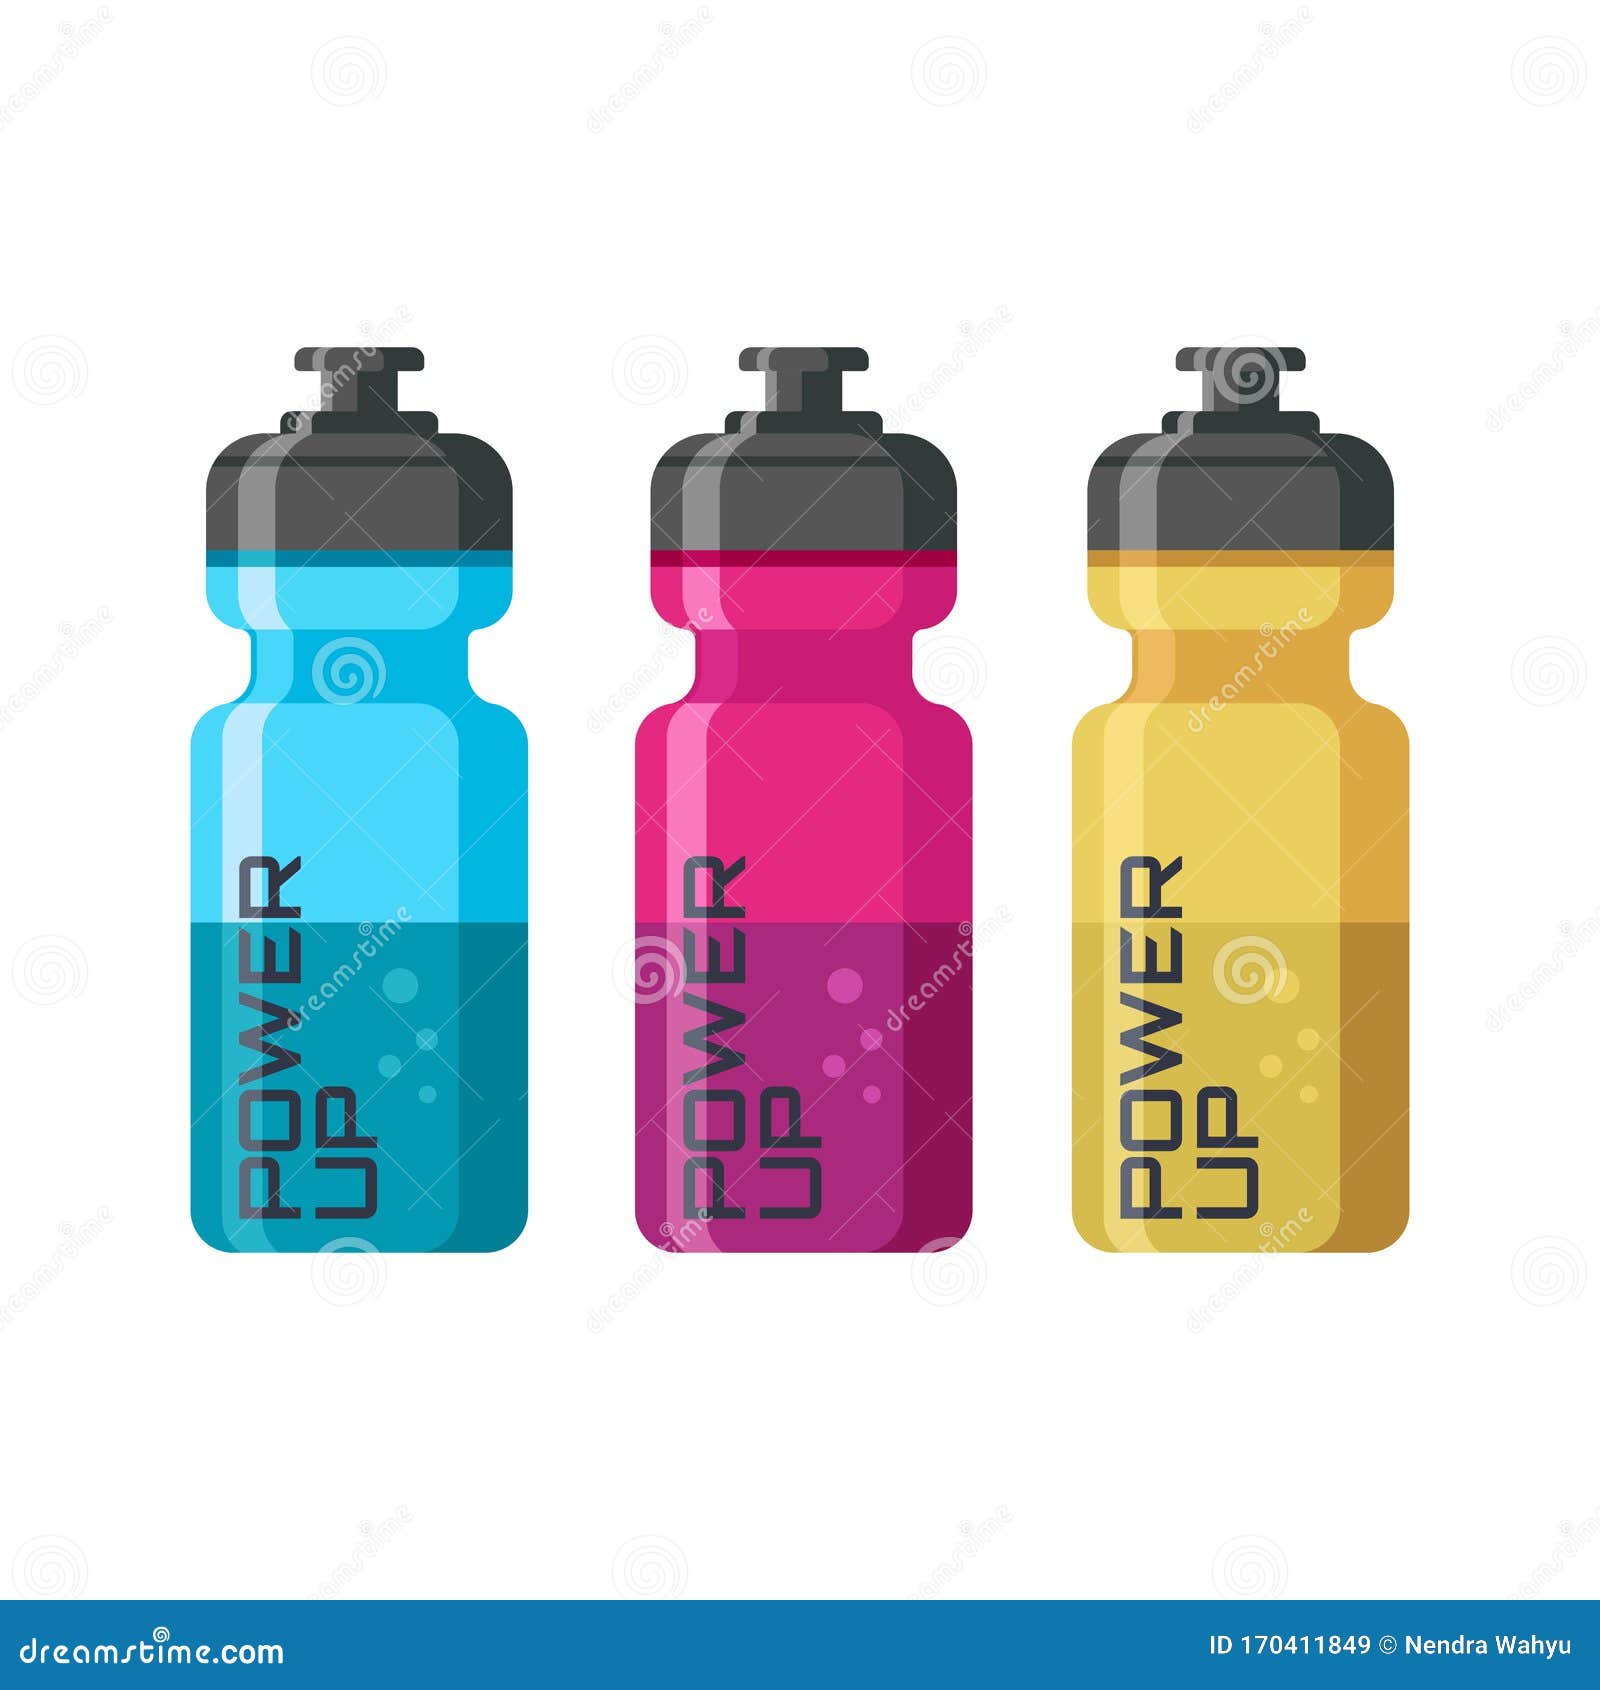 https://thumbs.dreamstime.com/z/design-concept-energy-drink-bottles-sports-activities-professional-product-design-model-examples-sports-bottle-170411849.jpg